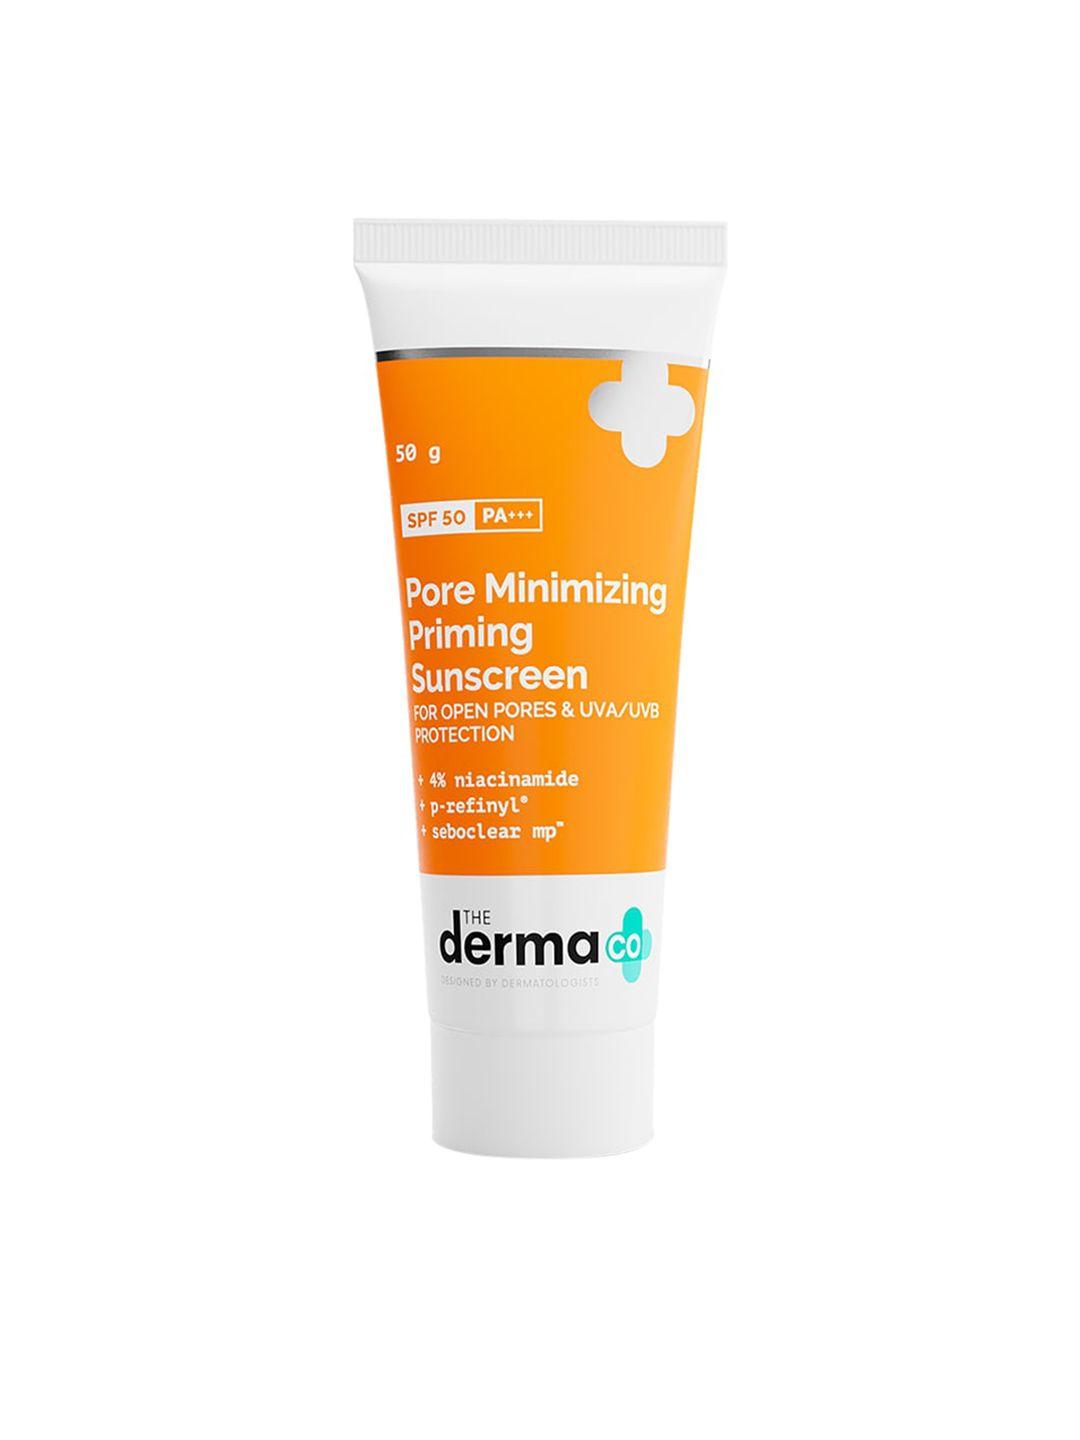 the derma co. pore minimizing priming sunscreen spf 50 & pa+++ -50g